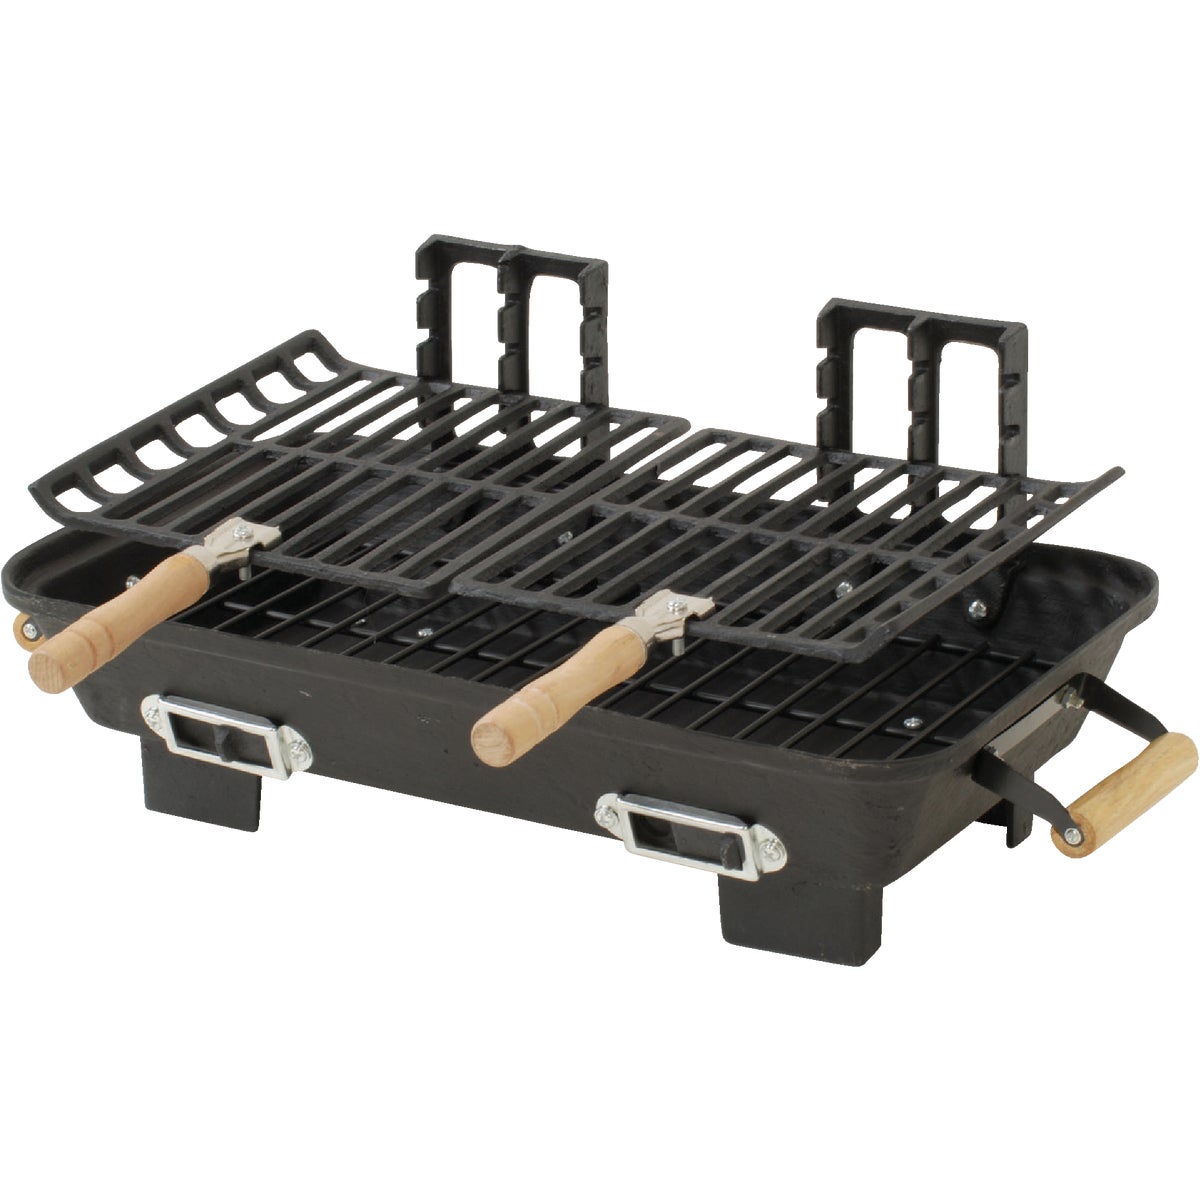 Item 806668, Durable cast-iron construction. 3-position adjustable cooking grids.